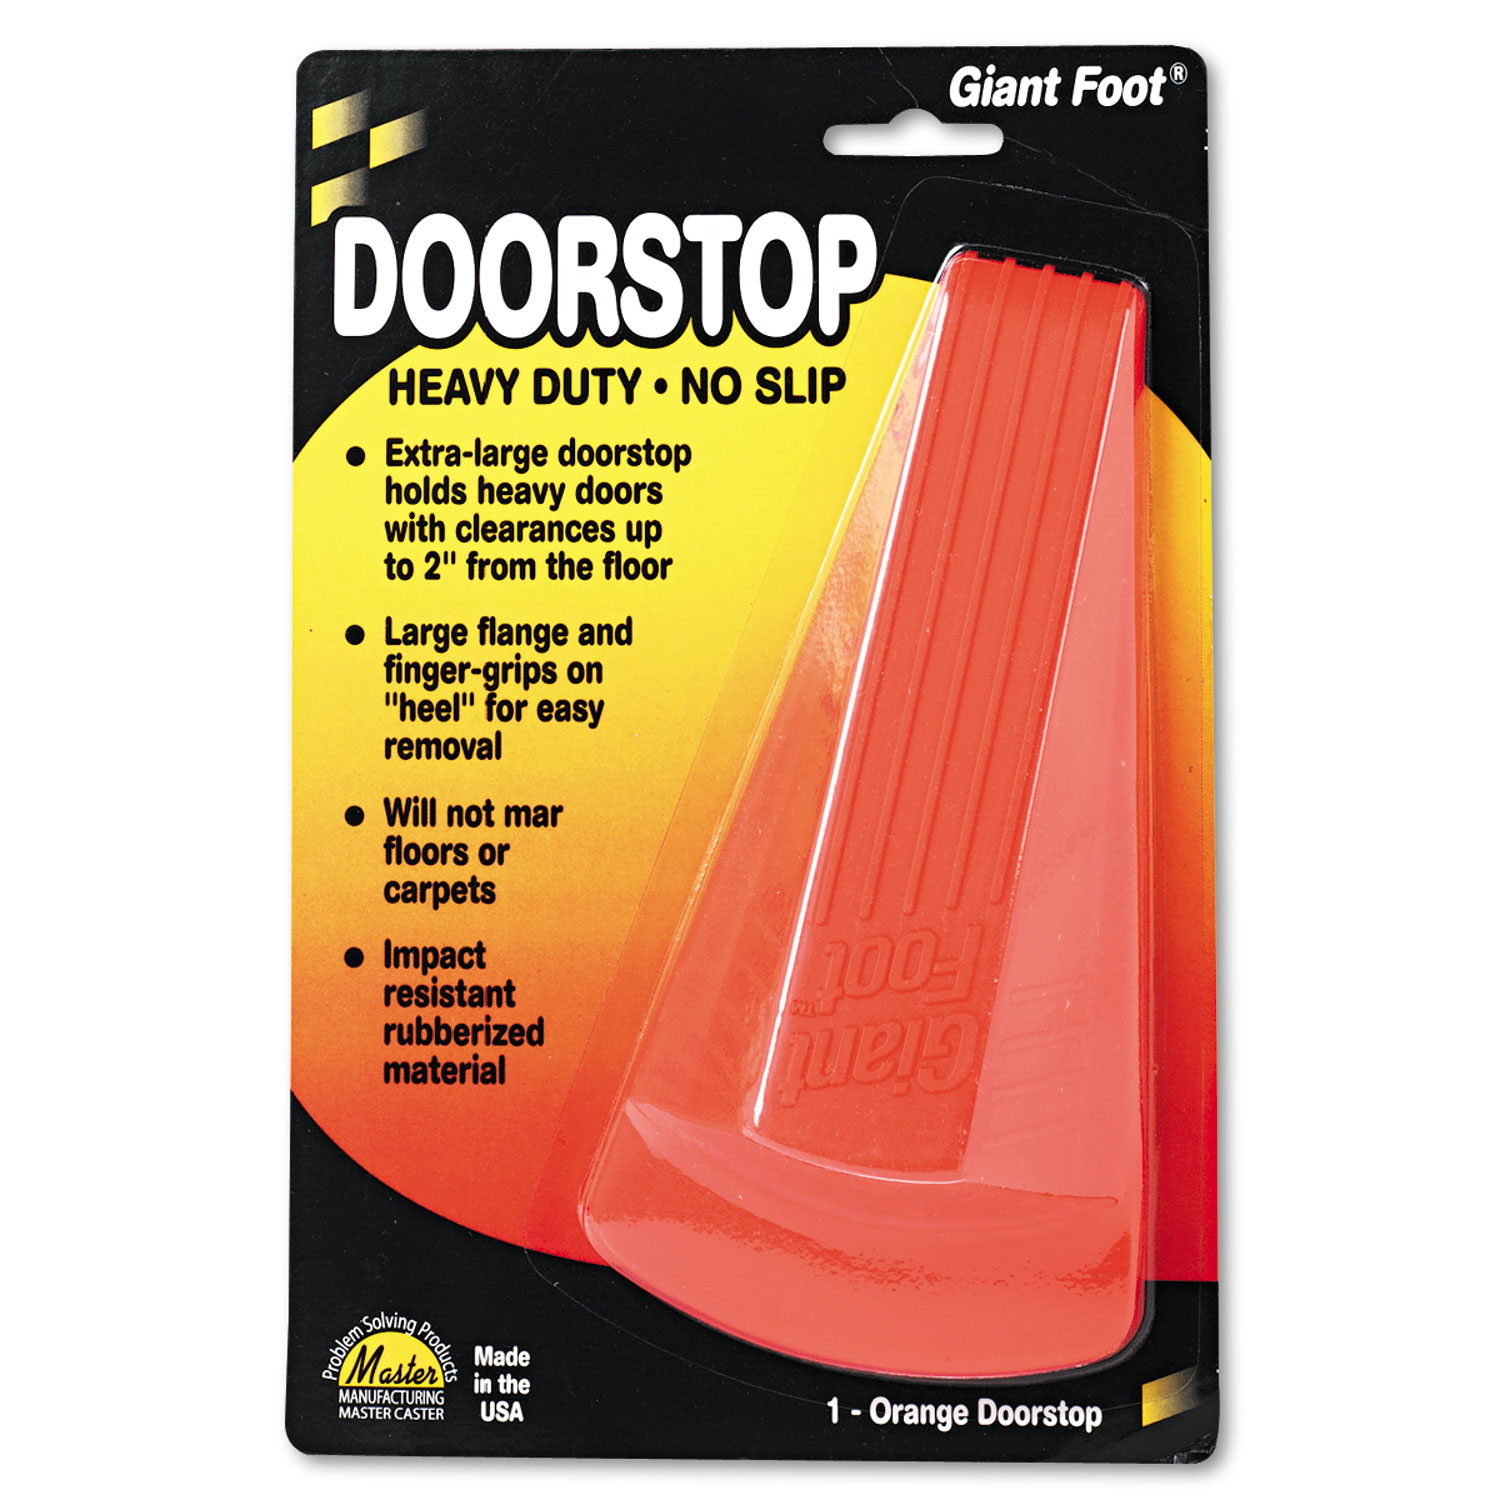  Master Caster 00965 Giant Foot Doorstop, No-Slip Rubber Wedge, 3.5w x 6.75d x 2h, Safety Orange (MAS00965) 